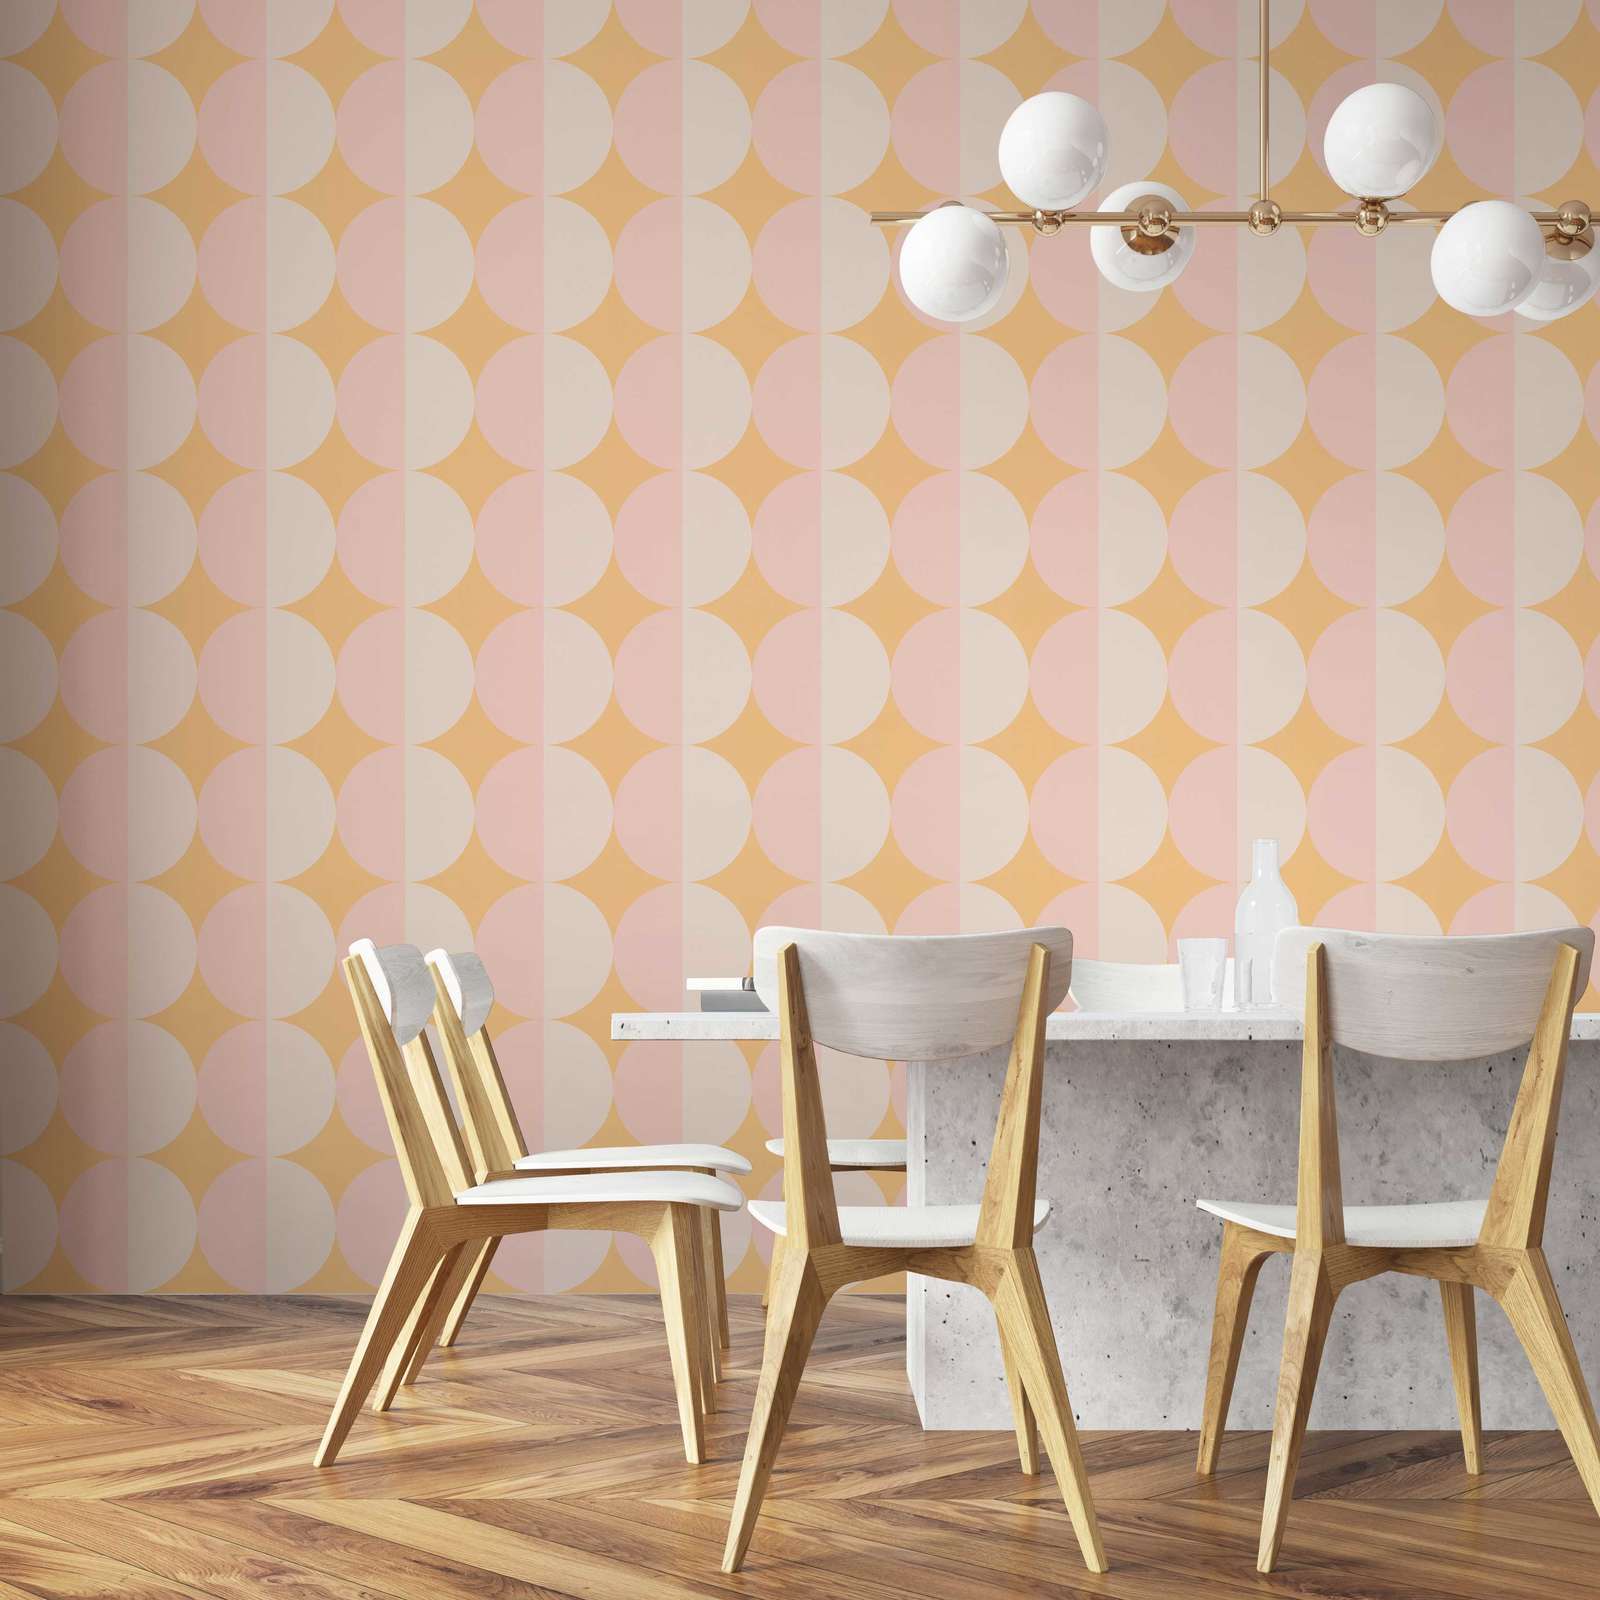             Non-woven wallpaper with circle pattern retro design - orange, beige, pink
        